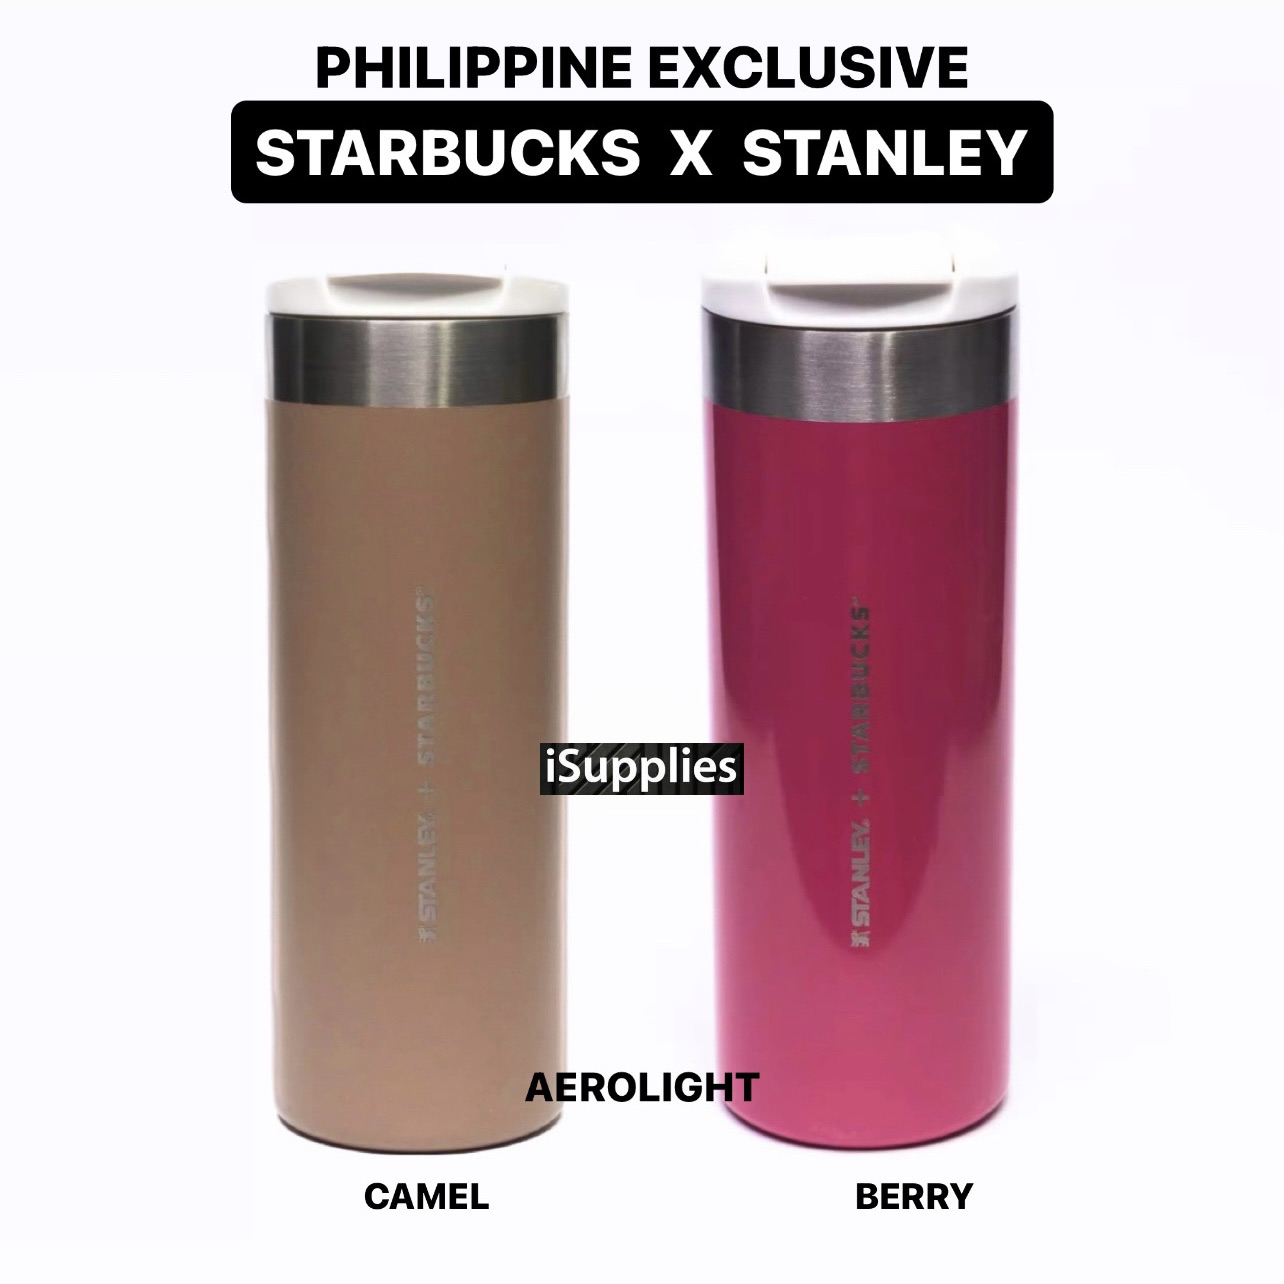 Berry + Camel SB x Stanley - Philippines Exclusive